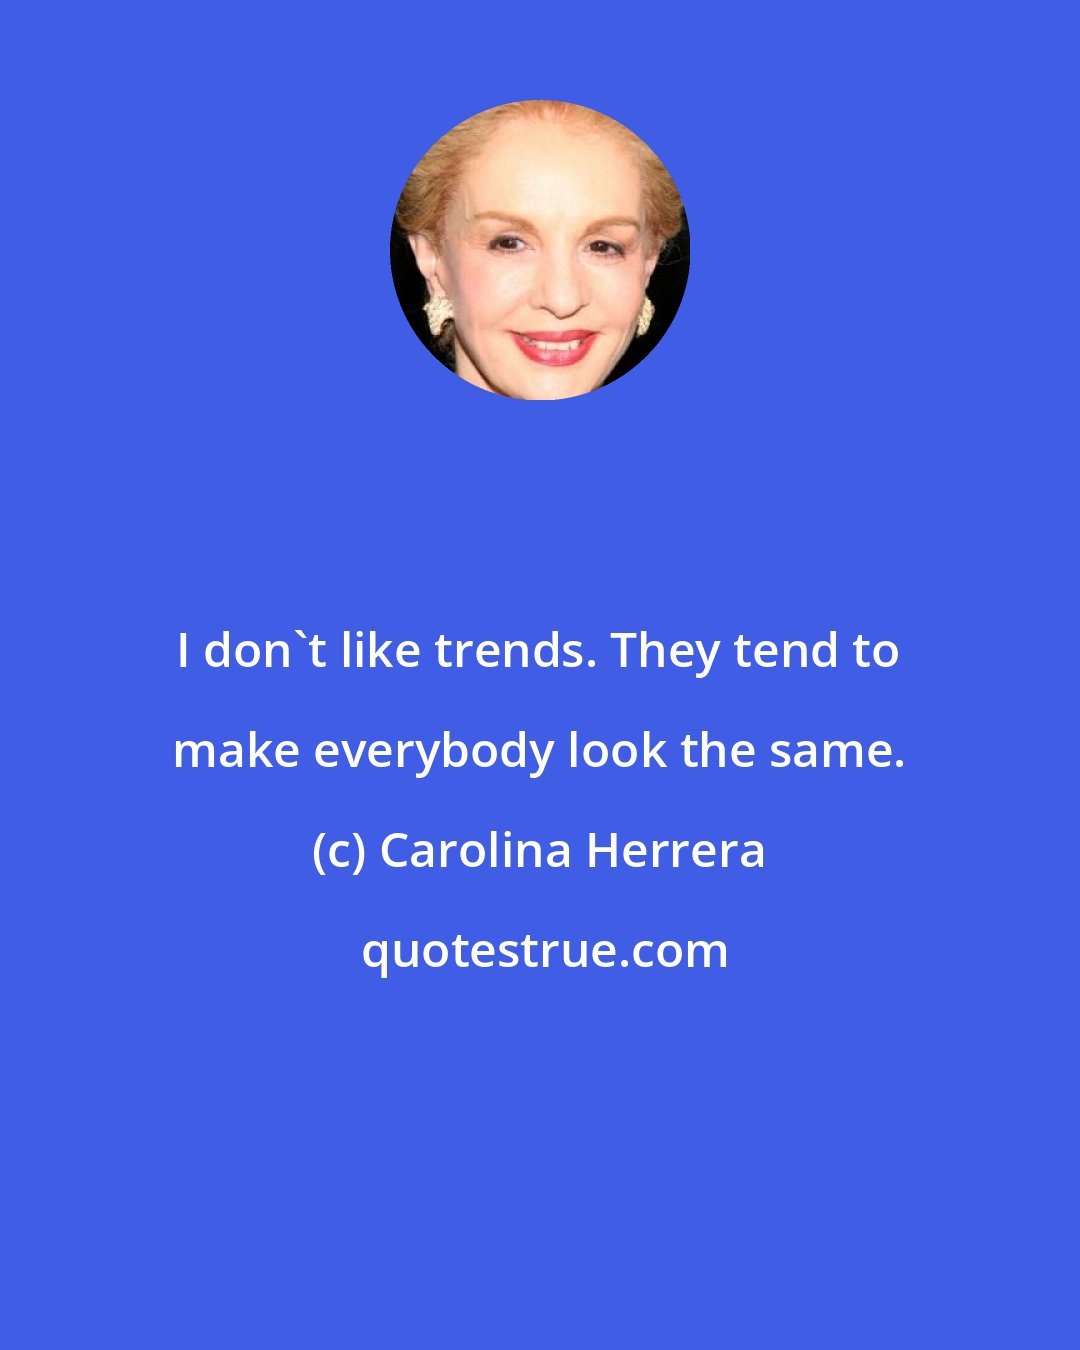 Carolina Herrera: I don't like trends. They tend to make everybody look the same.